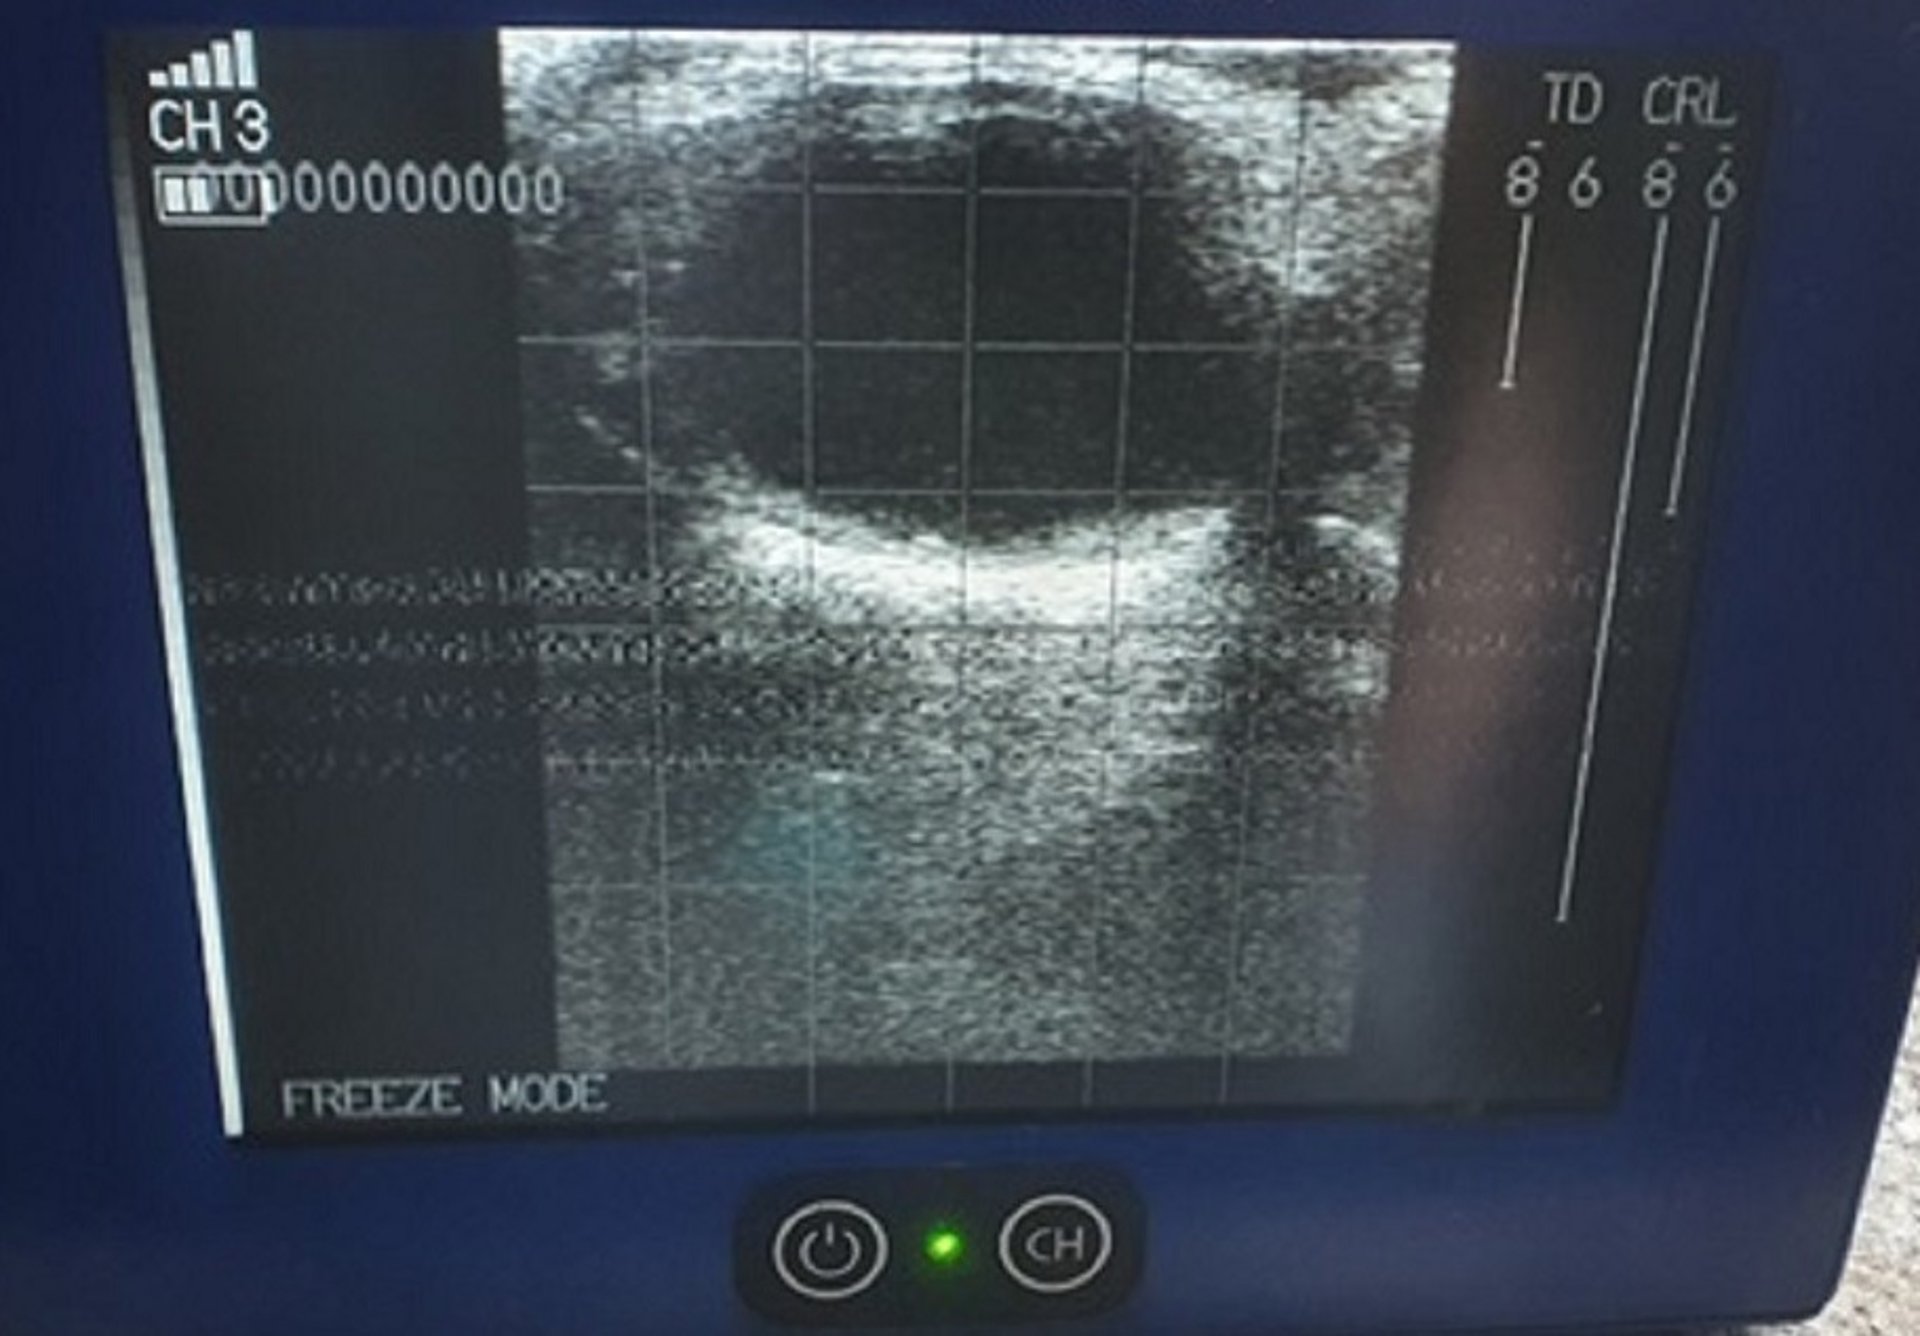 Follicular cyst > 40 mm, ultrasonographic image, cow